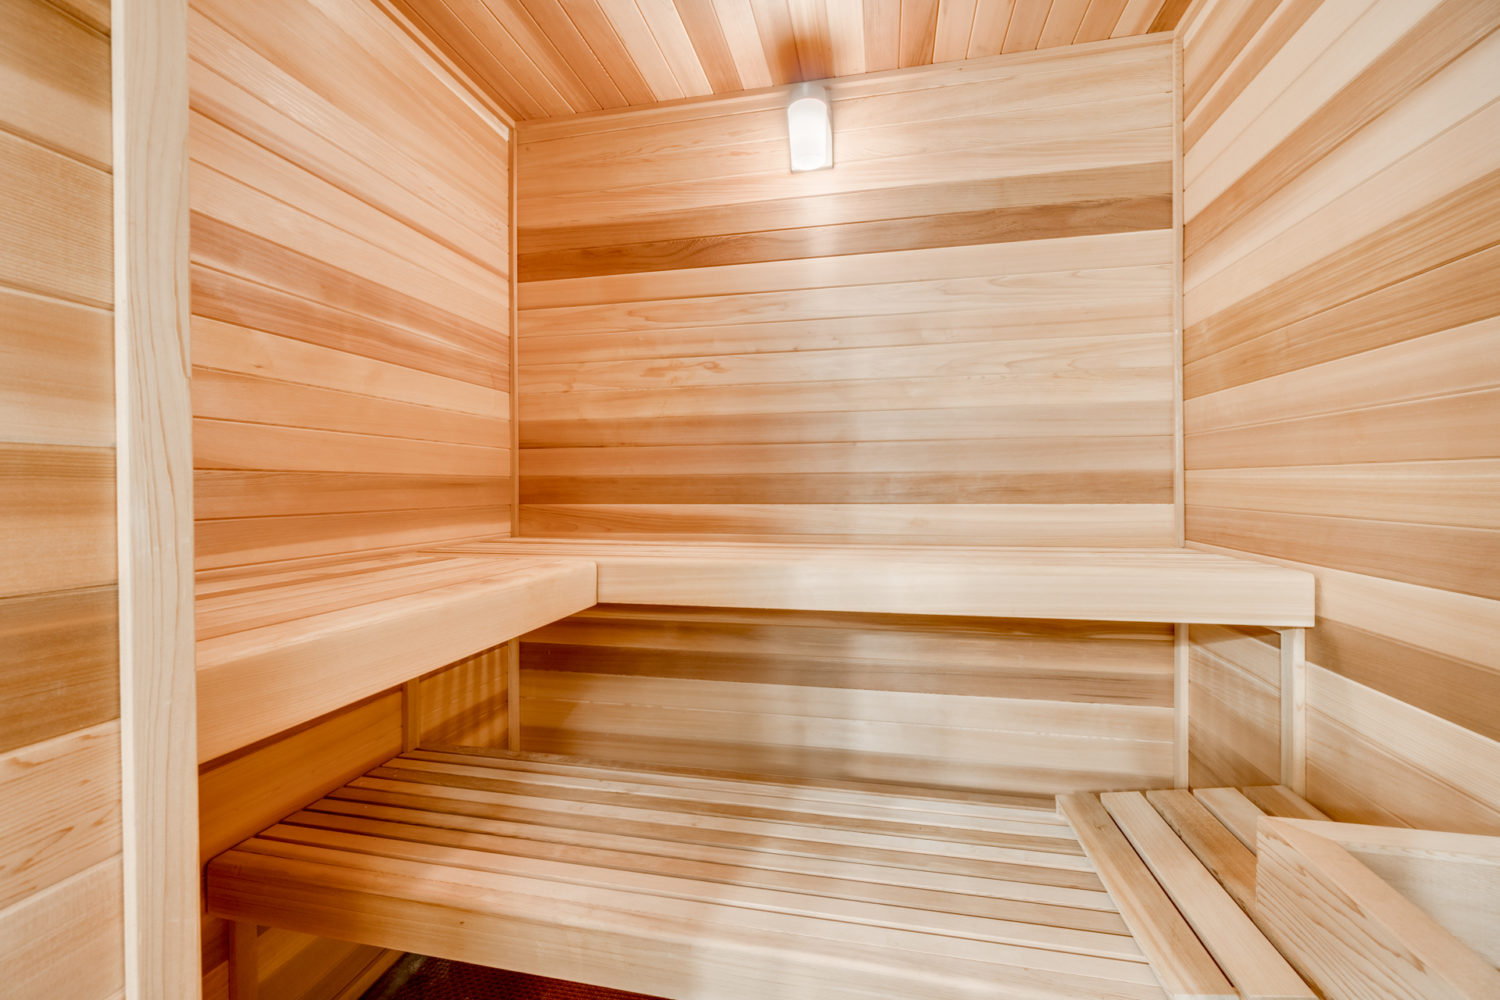 Home Sauna: How To Add A Sauna To Your Home